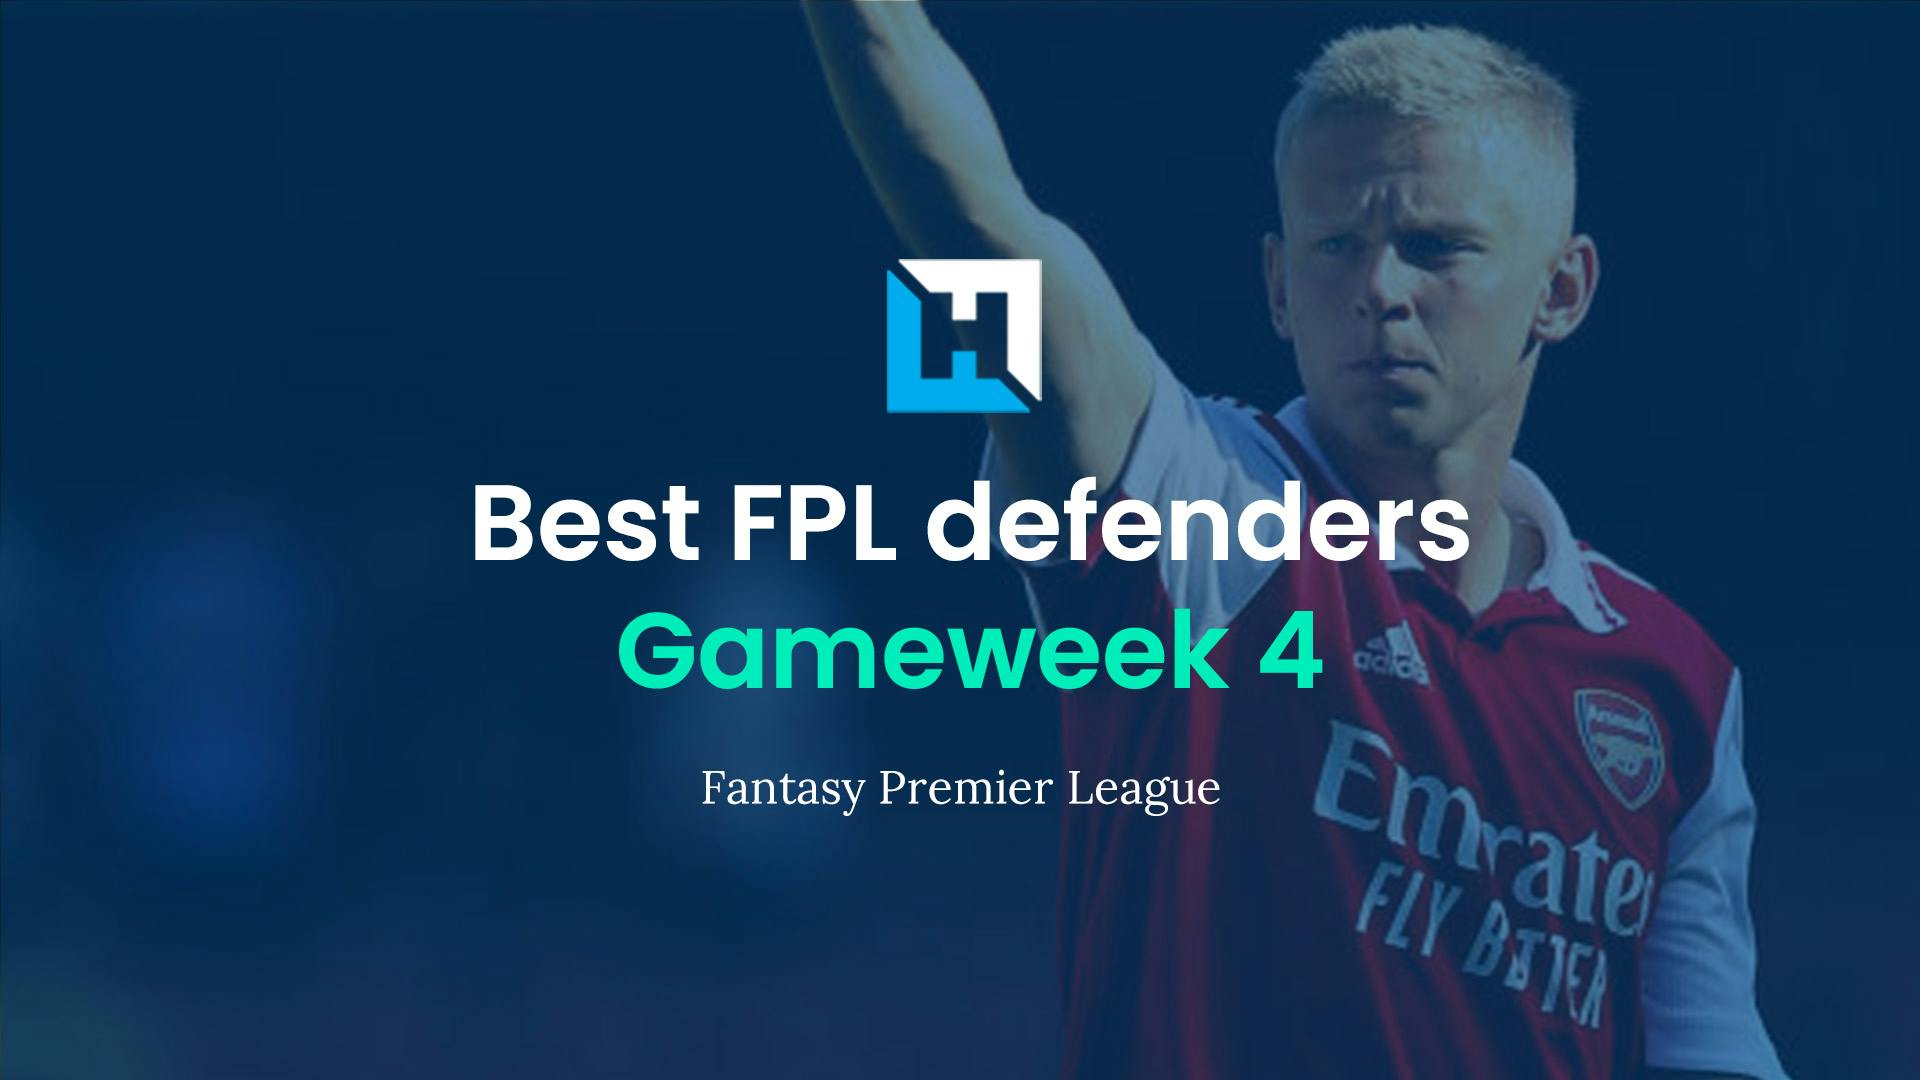 Best FPL players for Gameweek 4: Top 5 best defenders